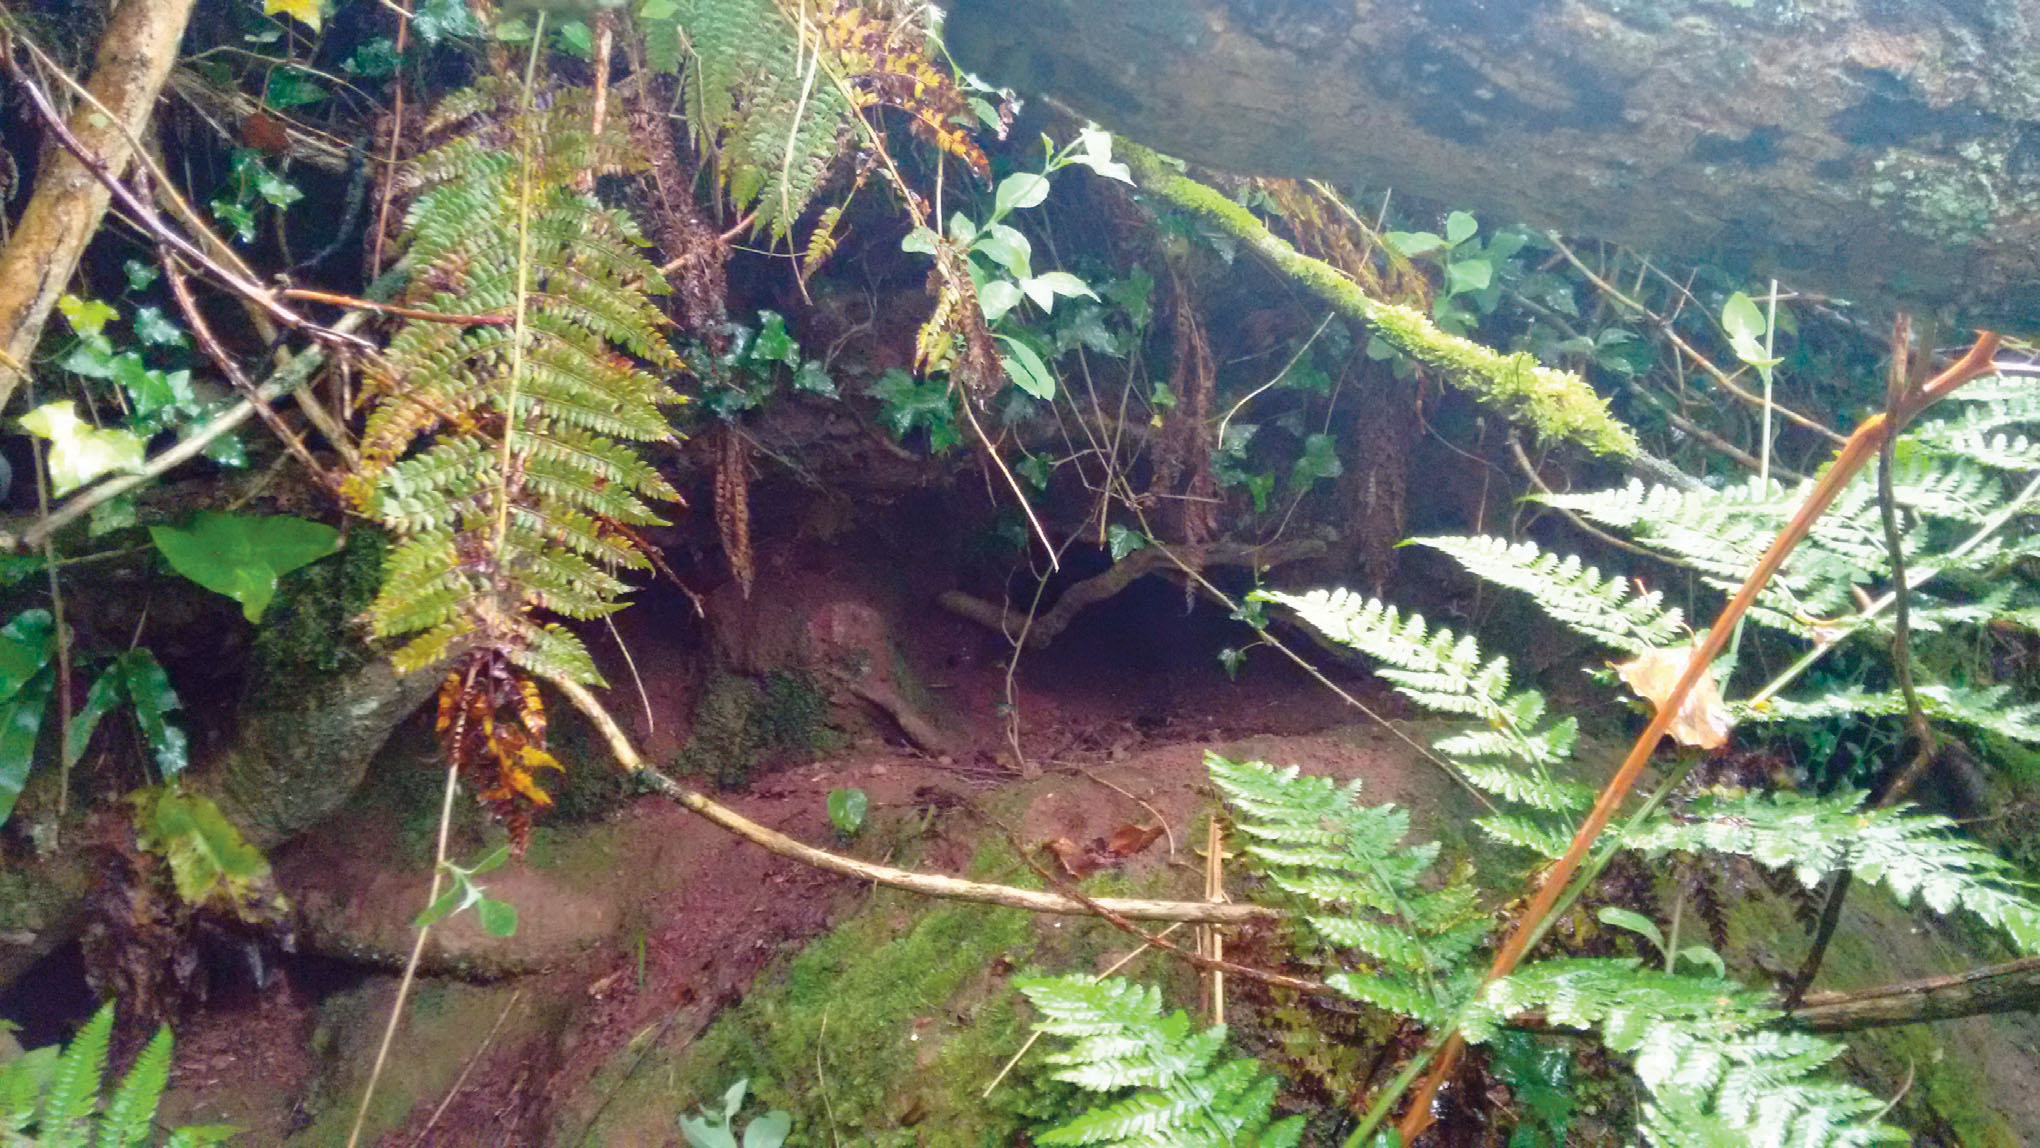 Image of a possible abandoned otter natal den